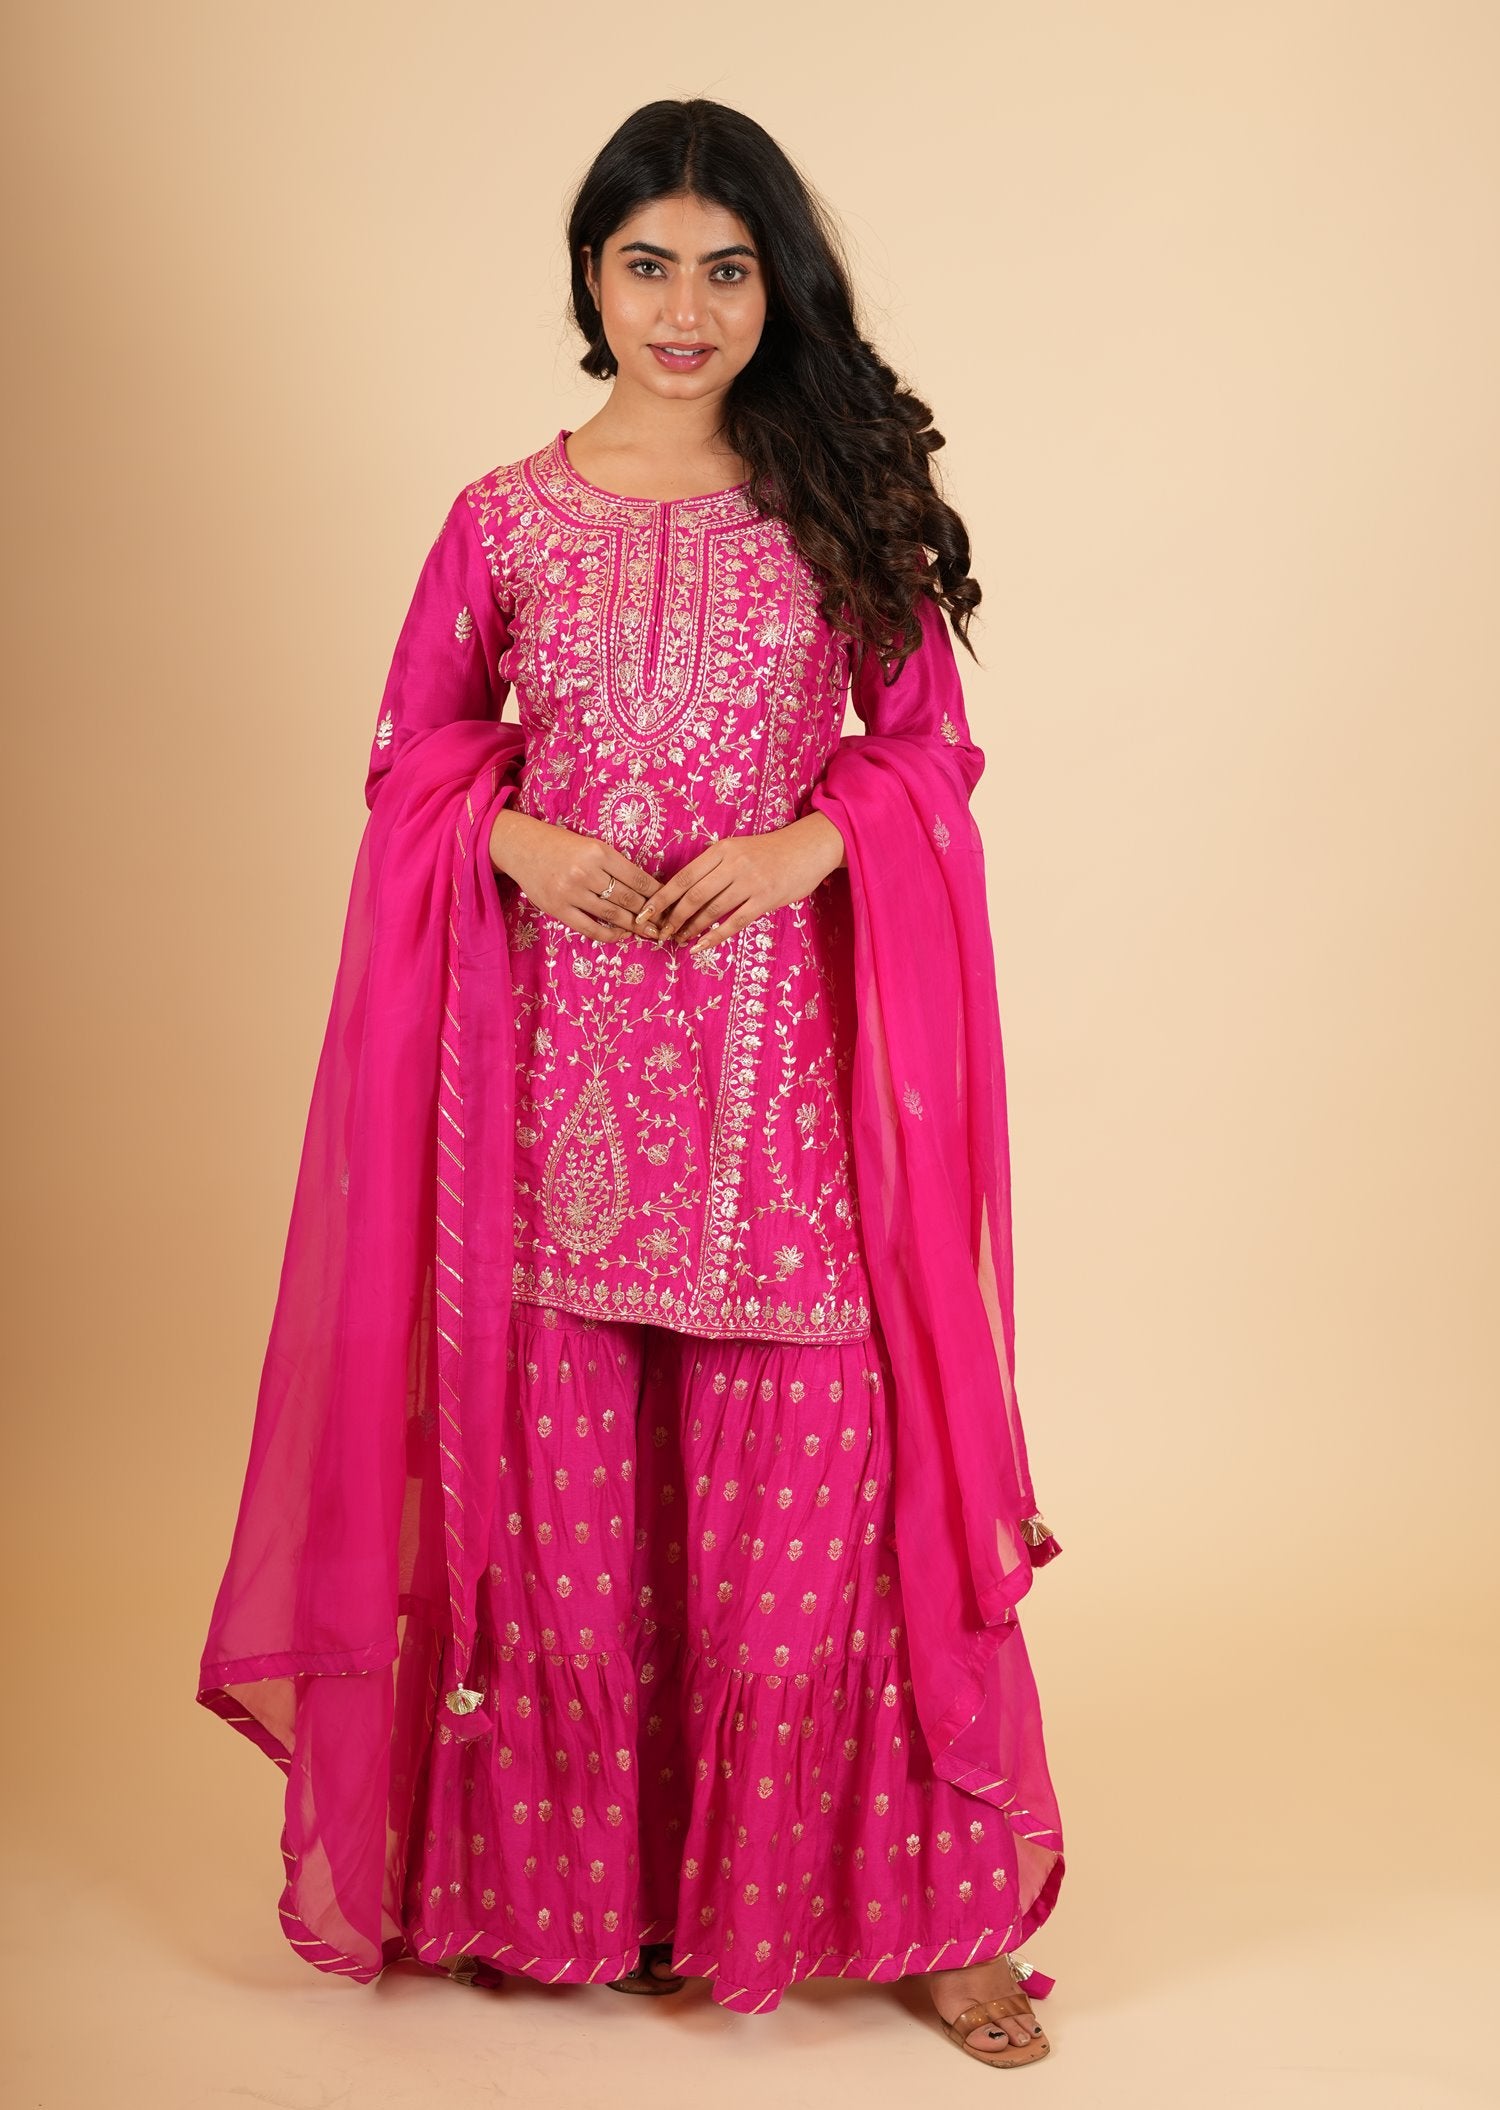 Kota Doria Pure Silk Salwar Suit With Hand Pittan Work at Rs 4999.00 |  रेशमी सलवार कमीज - The Leheriya Creations, Delhi | ID: 26360512491